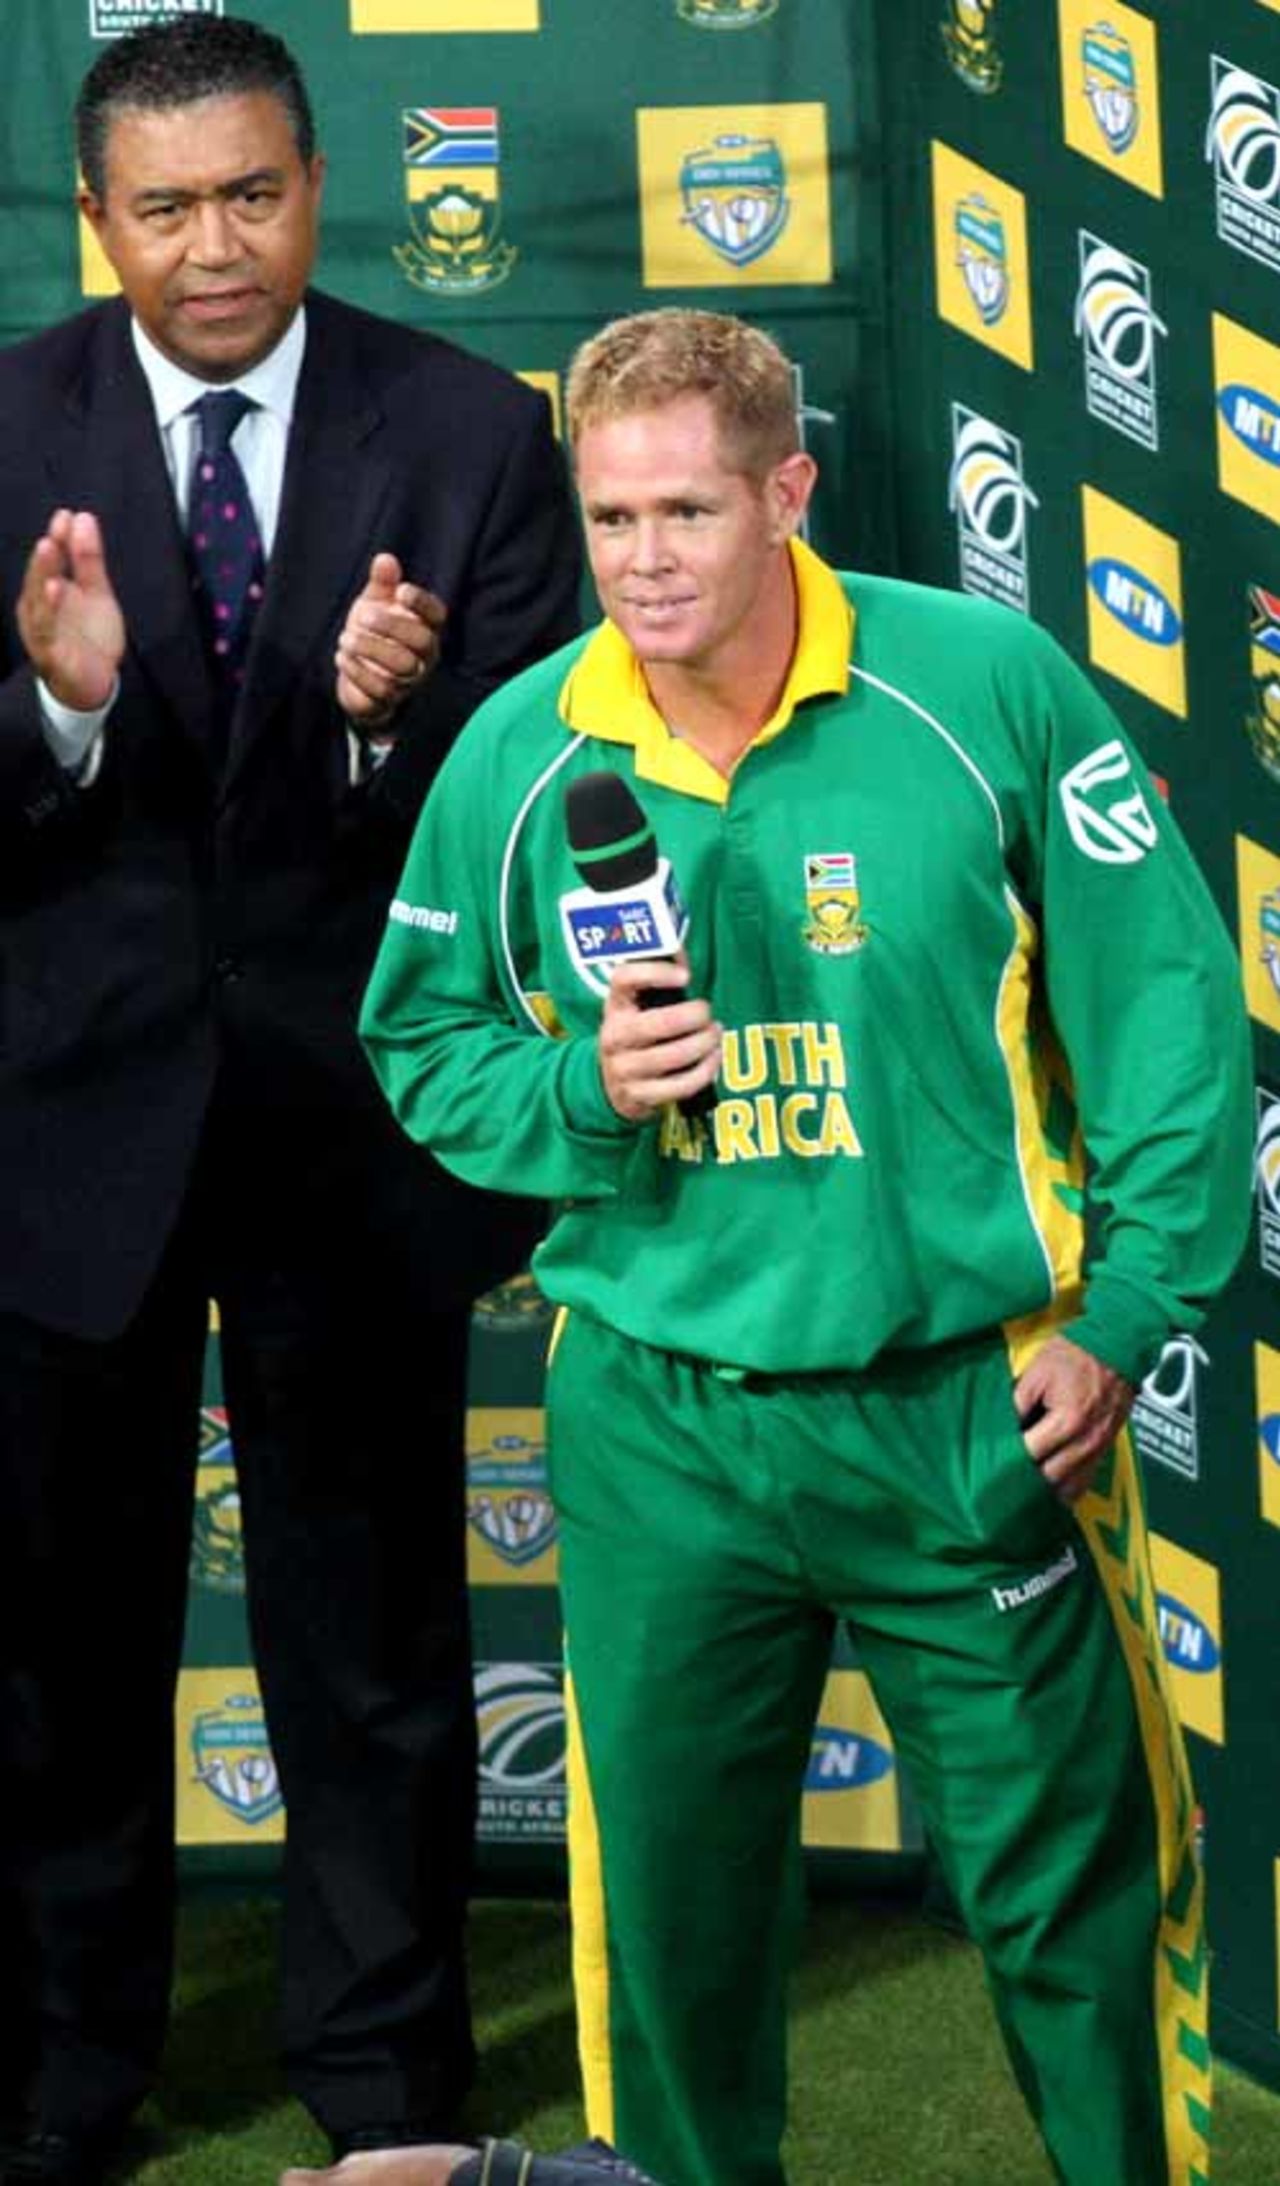 Shaun Pollock gives his farewell speech at the Wanderers, 5th ODI, Johannesburg, February 3, 2008